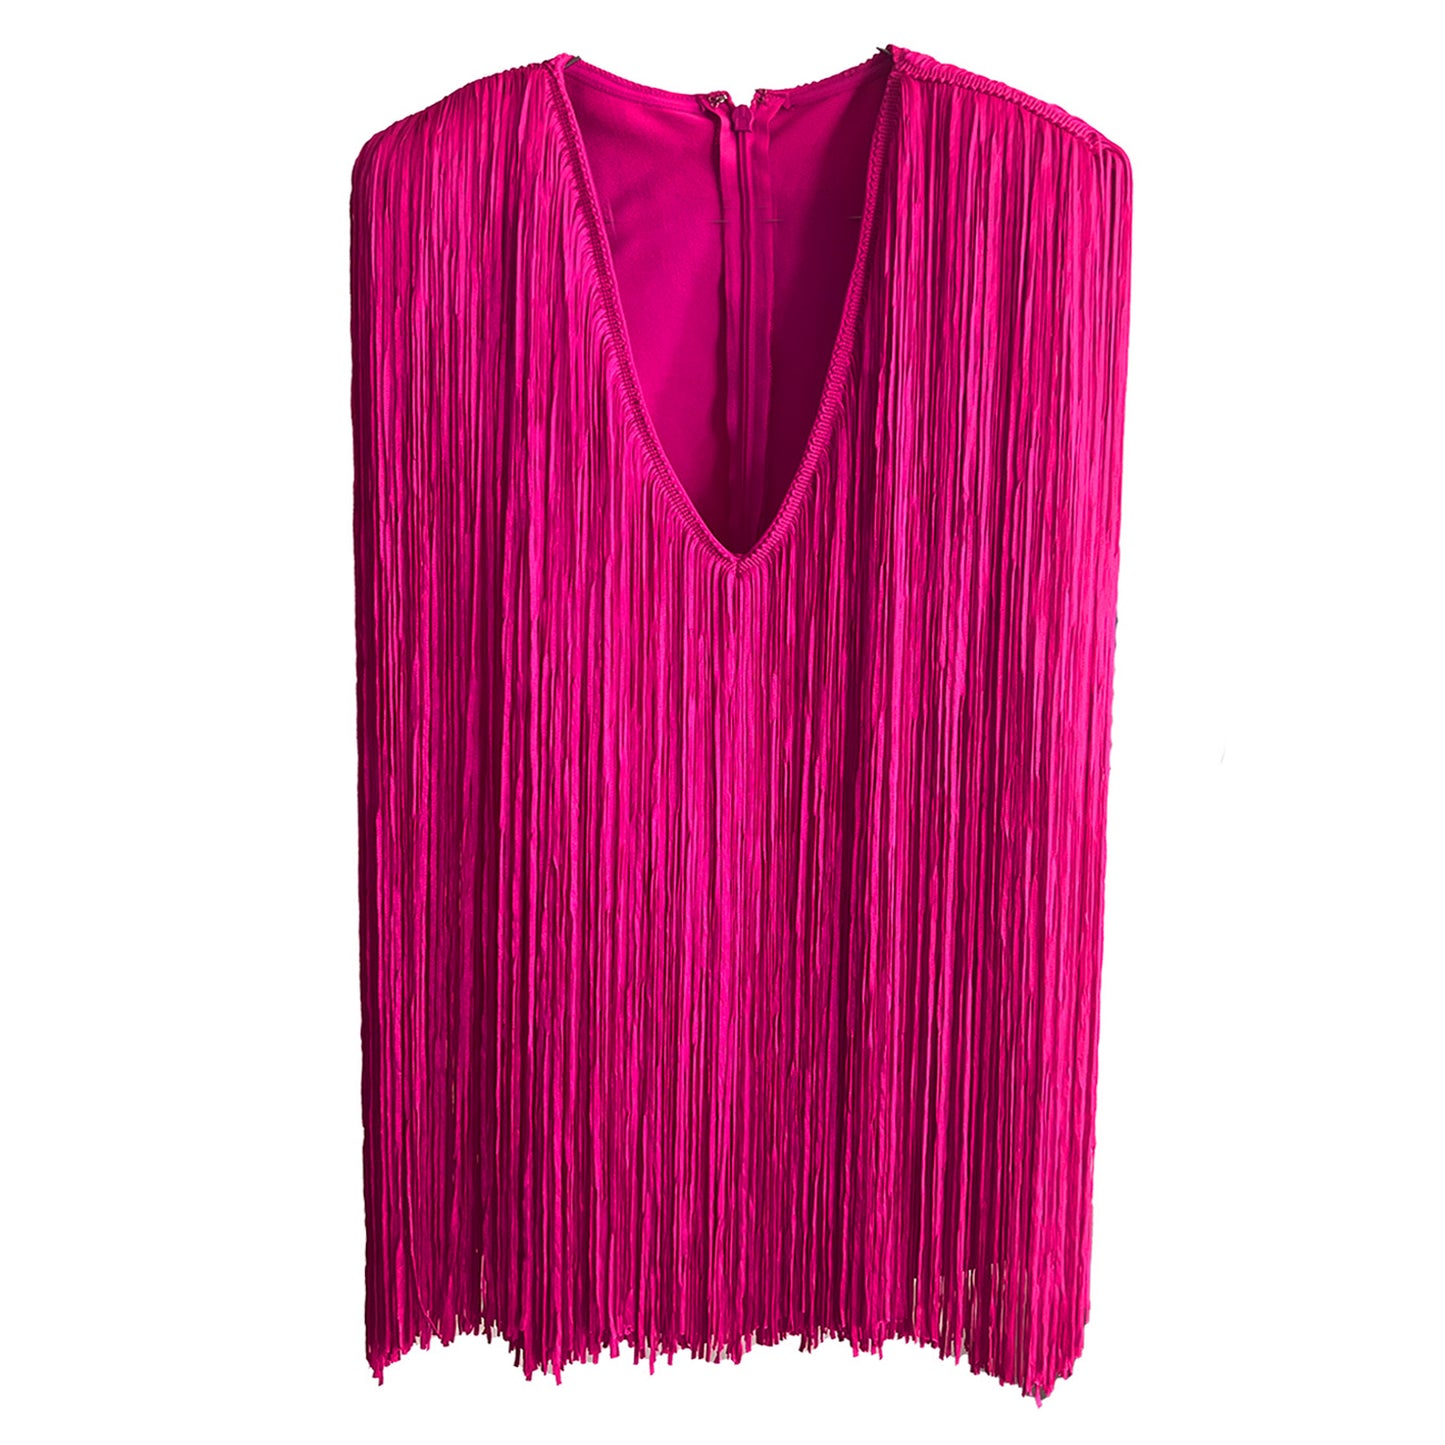 Long tassel dress pink